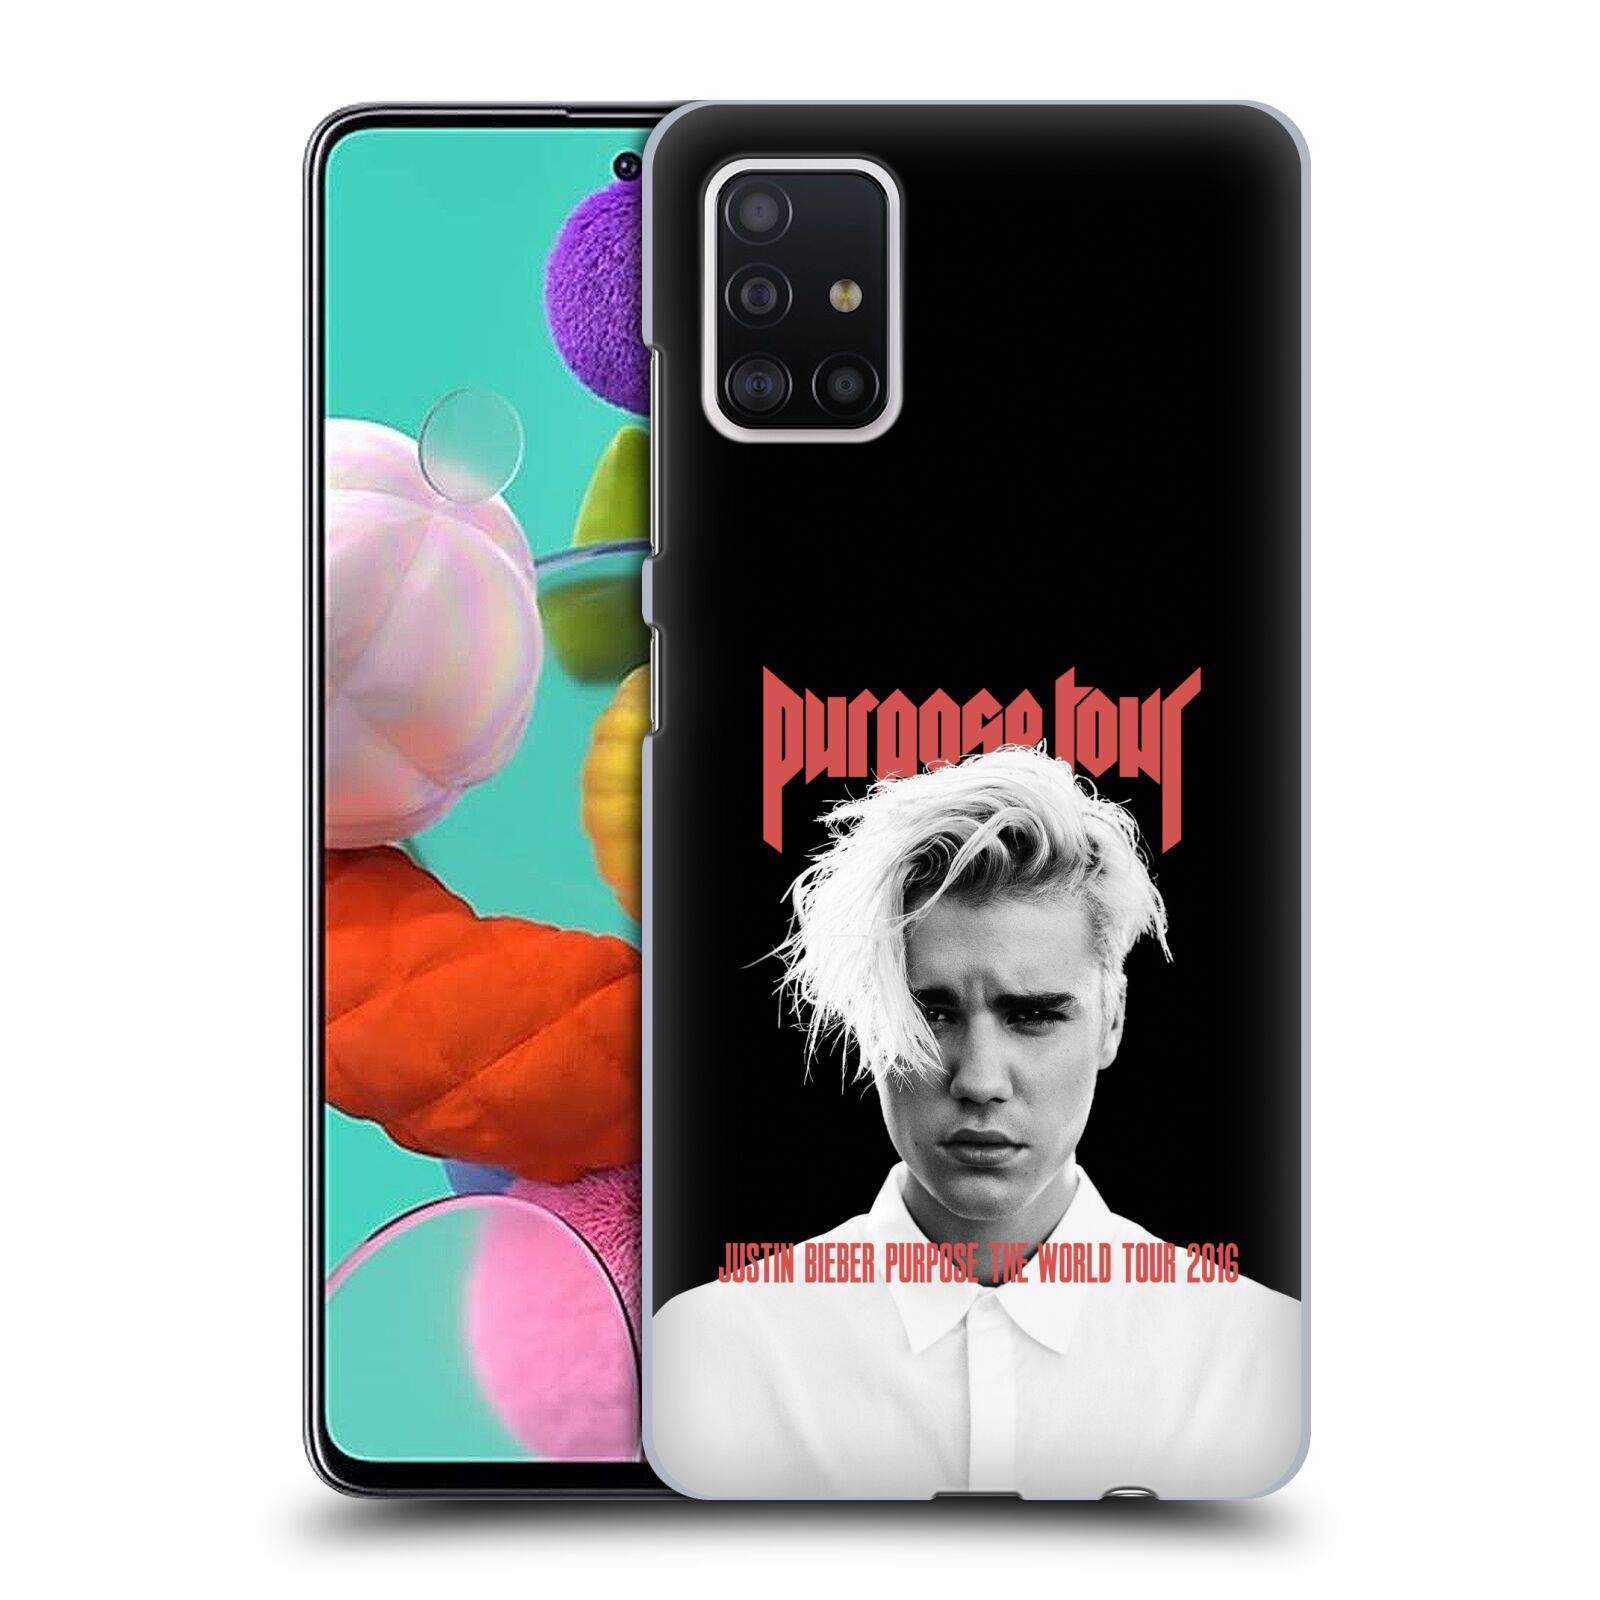 Pouzdro na mobil Samsung Galaxy A51 - HEAD CASE - Justin Bieber foto Purpose tour černé pozadí